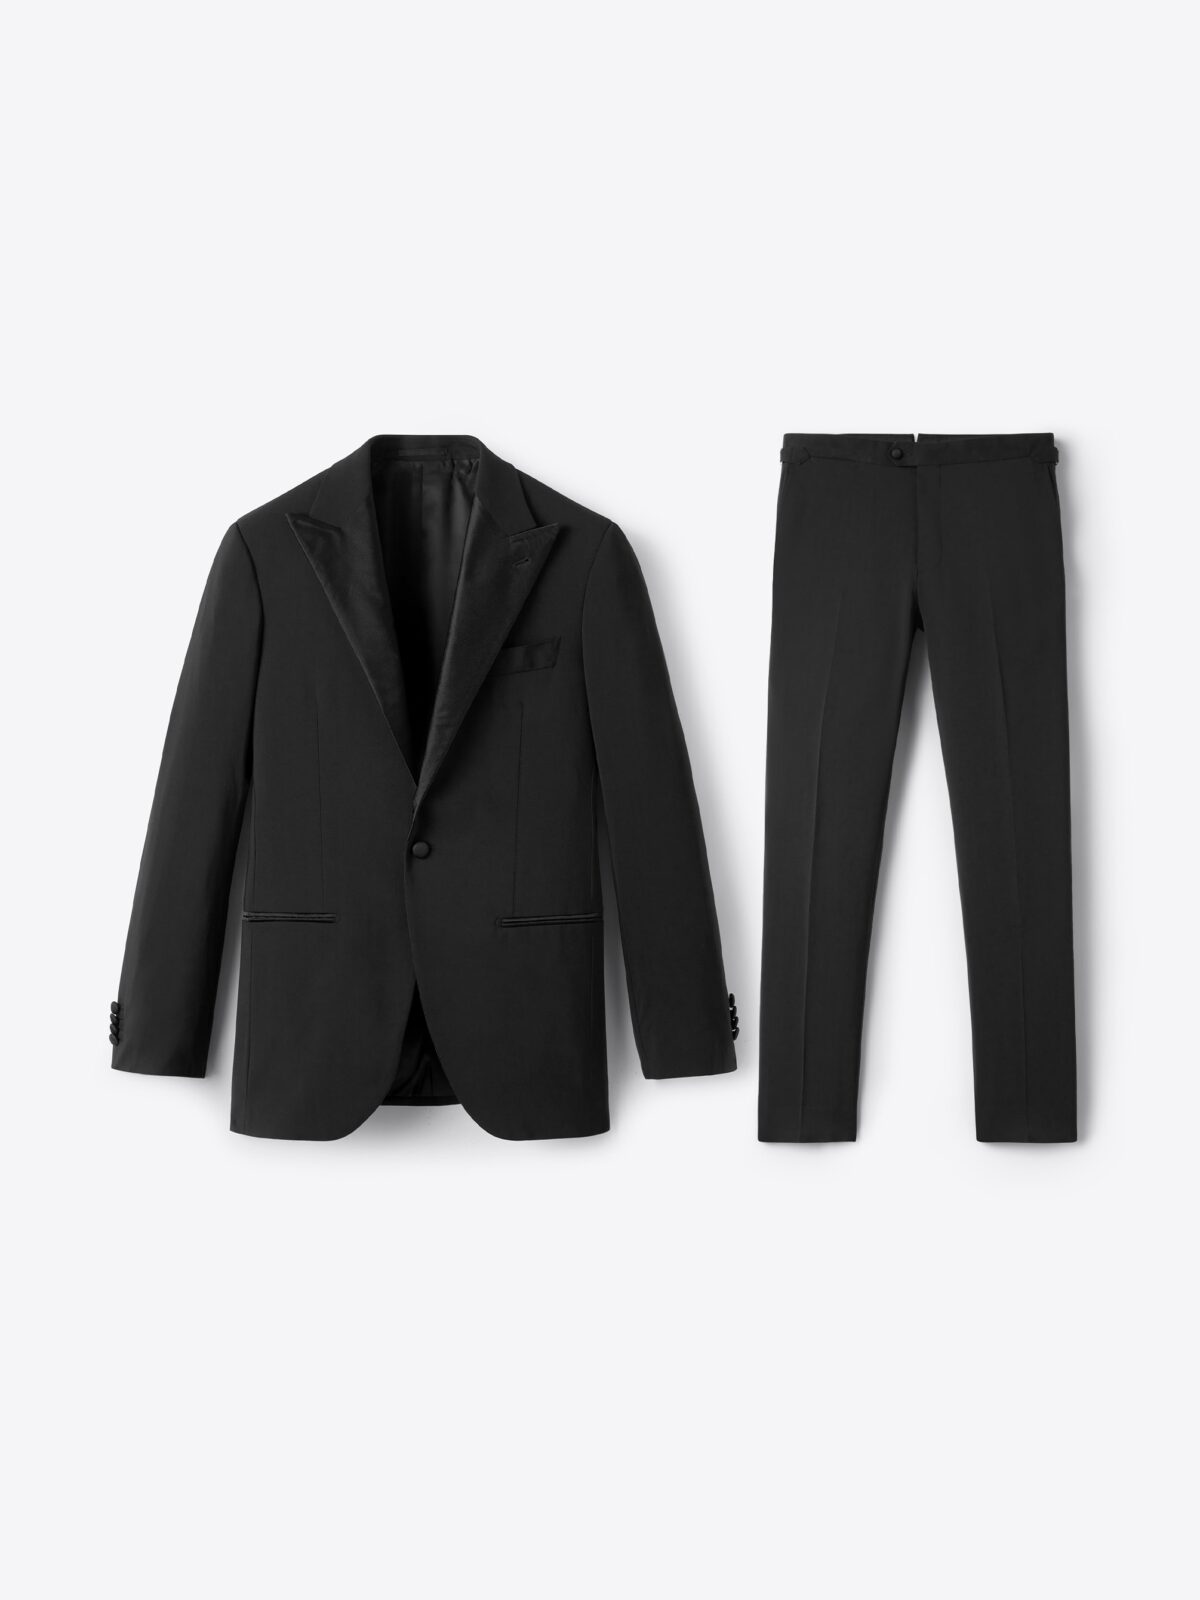 Men Peaked Lapel Tuxedo Jacket Suit Office Business One Button Blazer